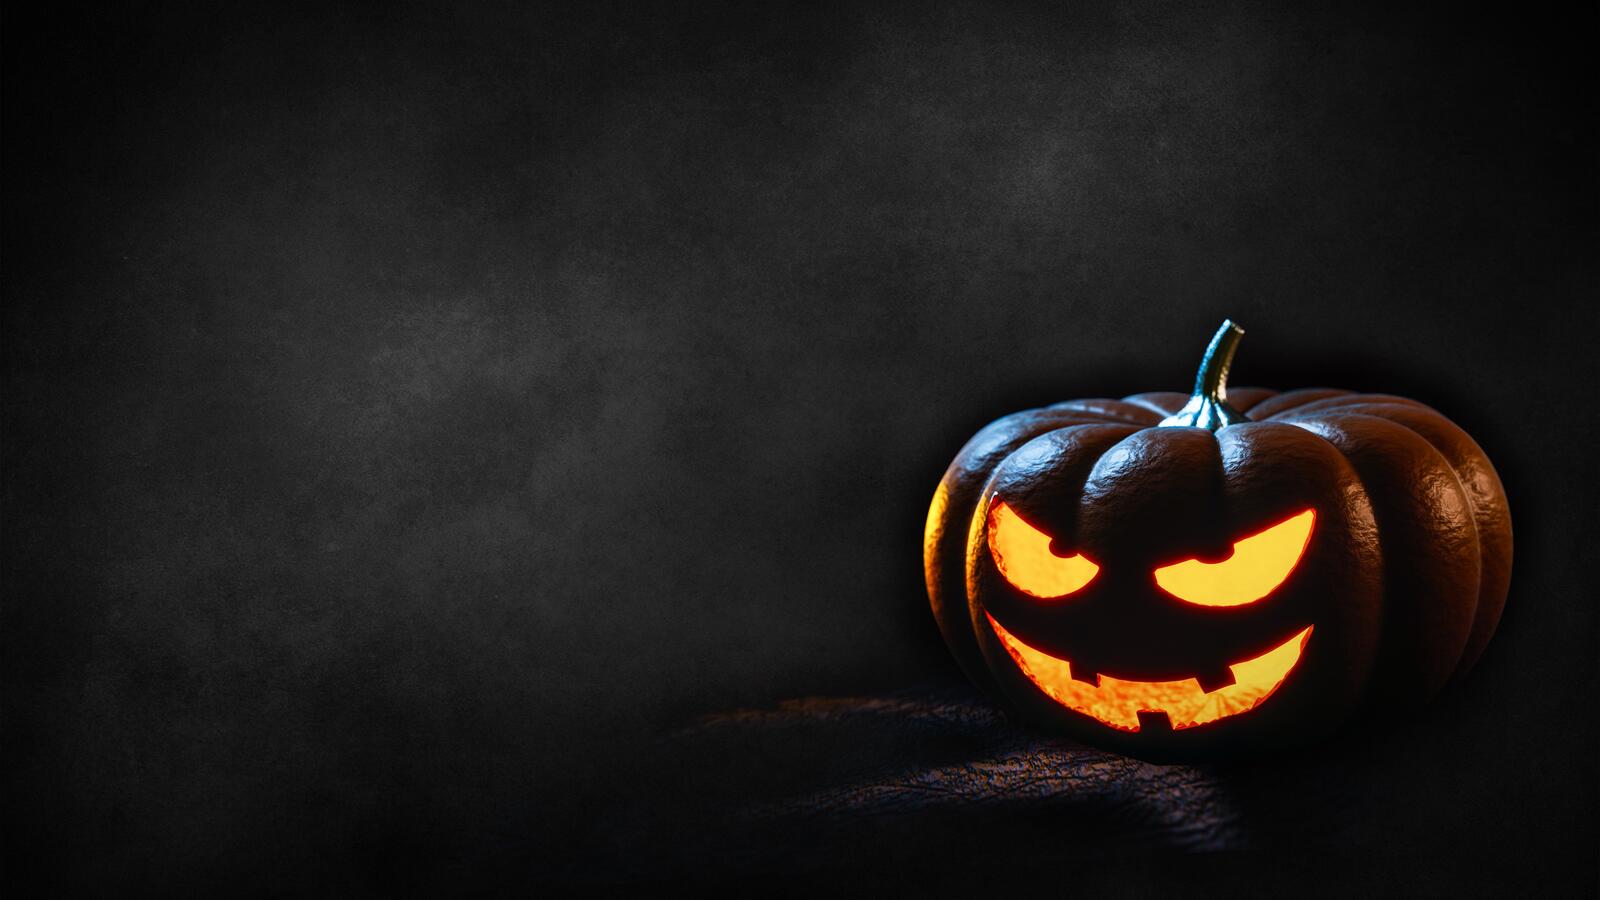 Free photo Spooky Halloween pumpkin on a dark background